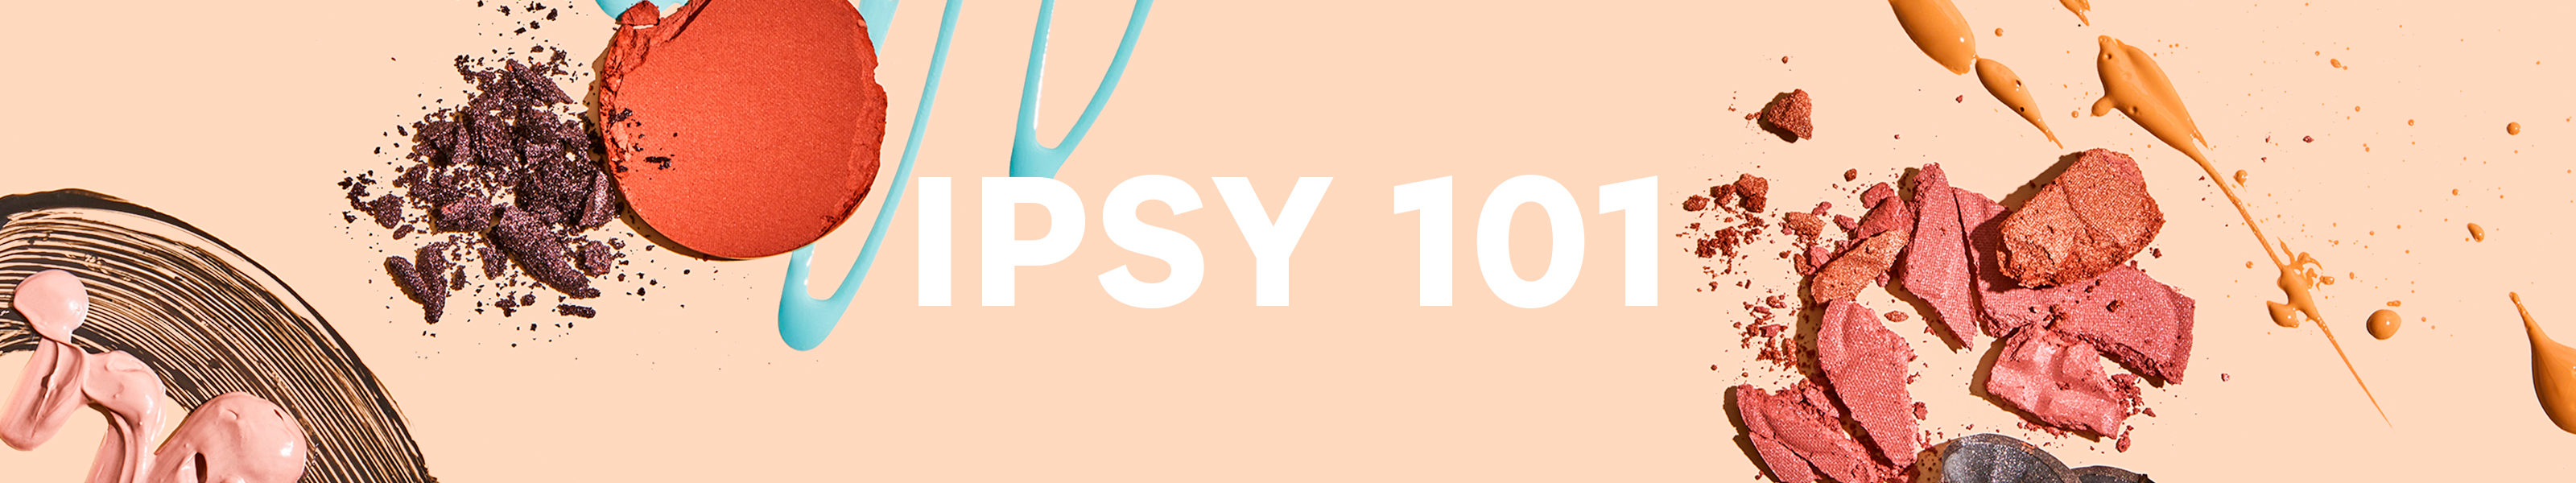 ipsy-101